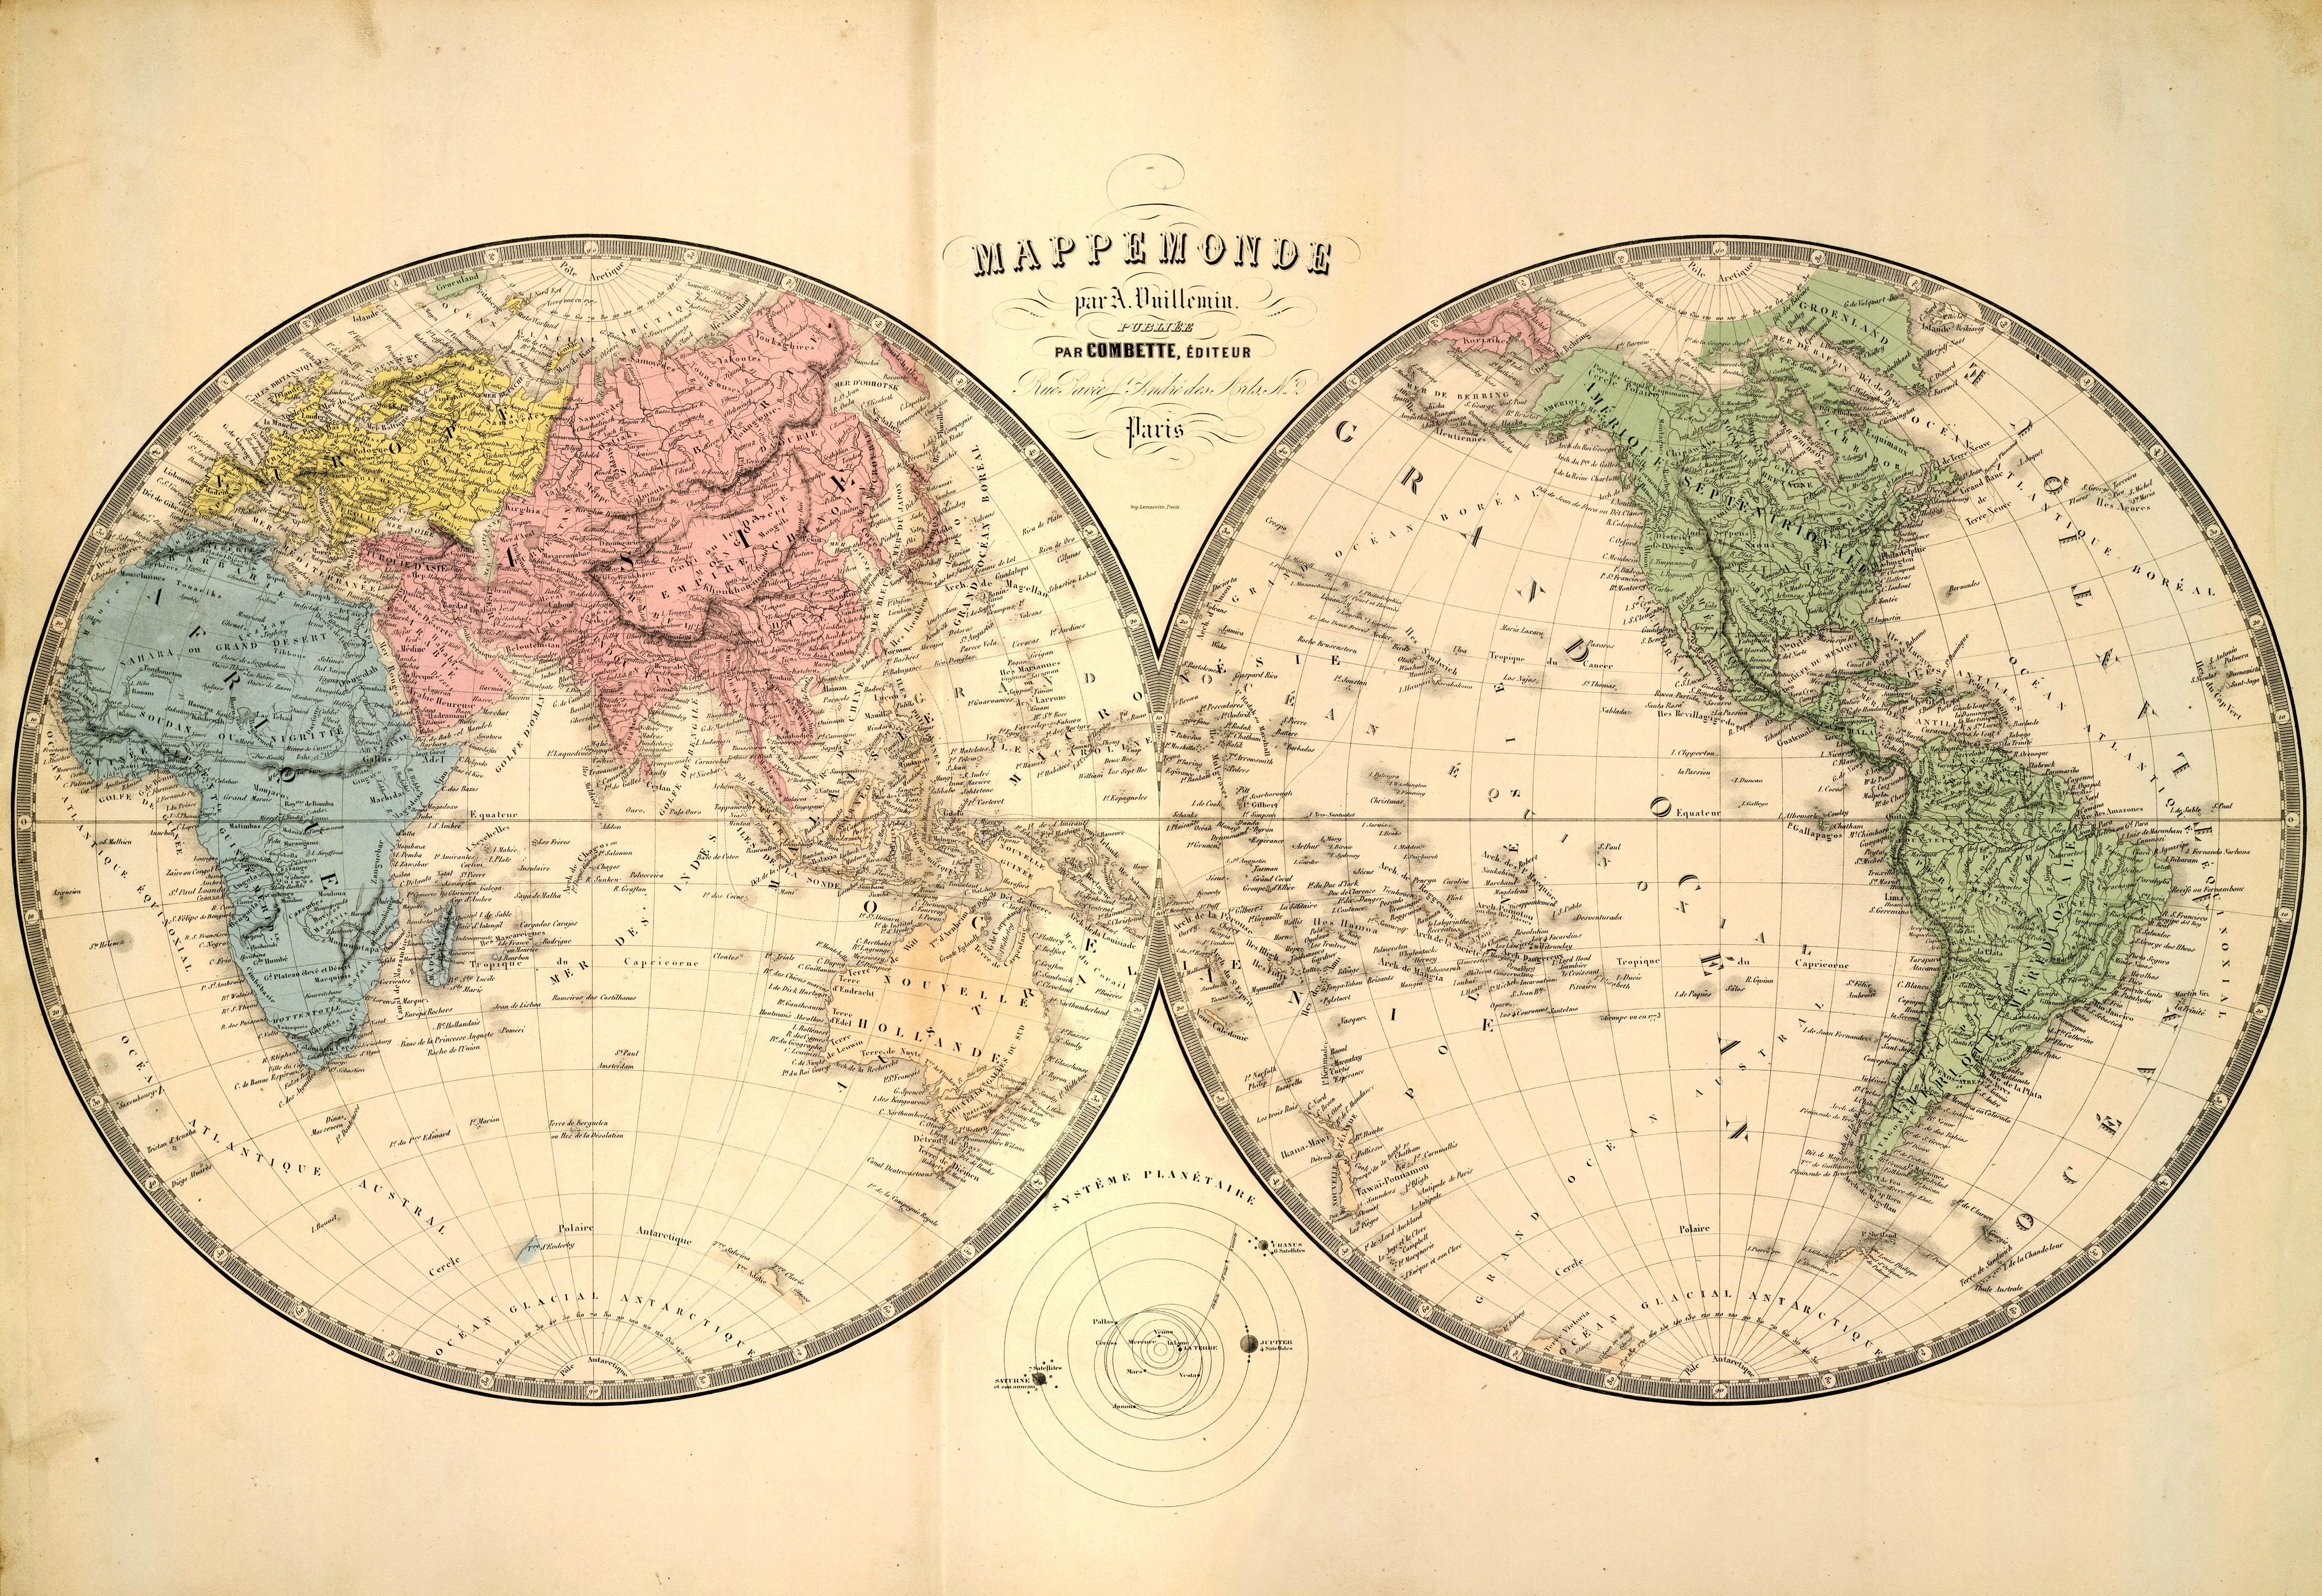 western and eastern hemisphere map